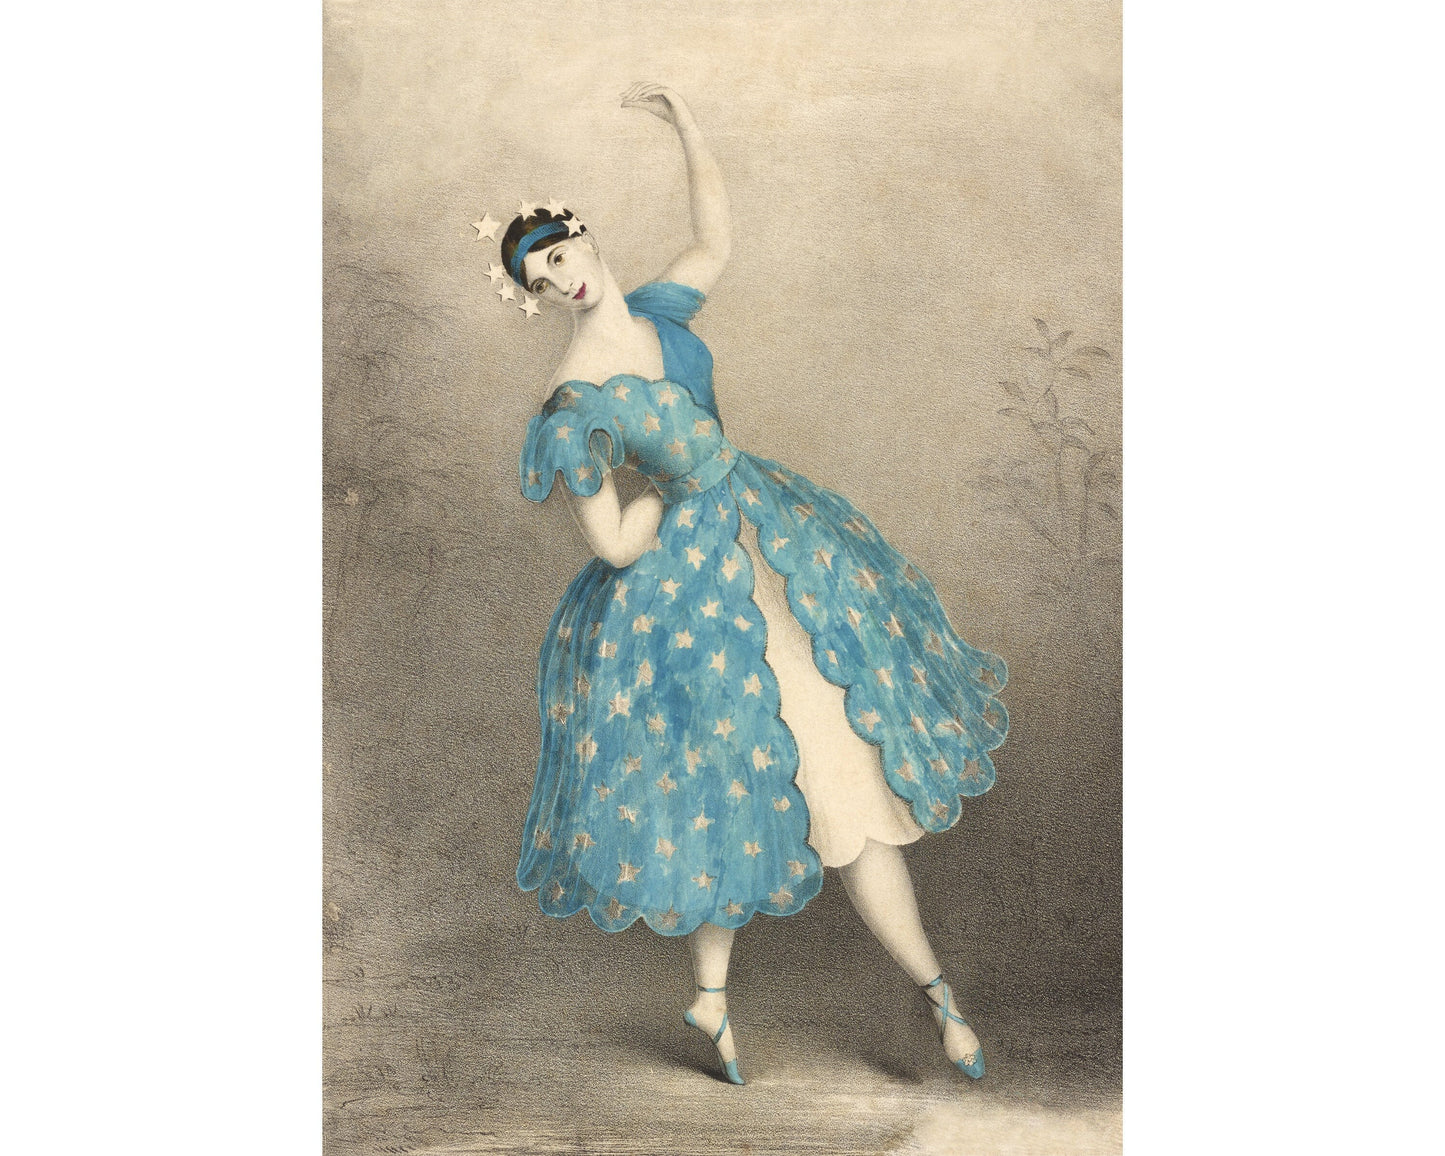 Vintage dancer art print | Crown of stars | Blue dress of stars | 19th century dance costume | Ballet fashion plate | Modern Vintage decor